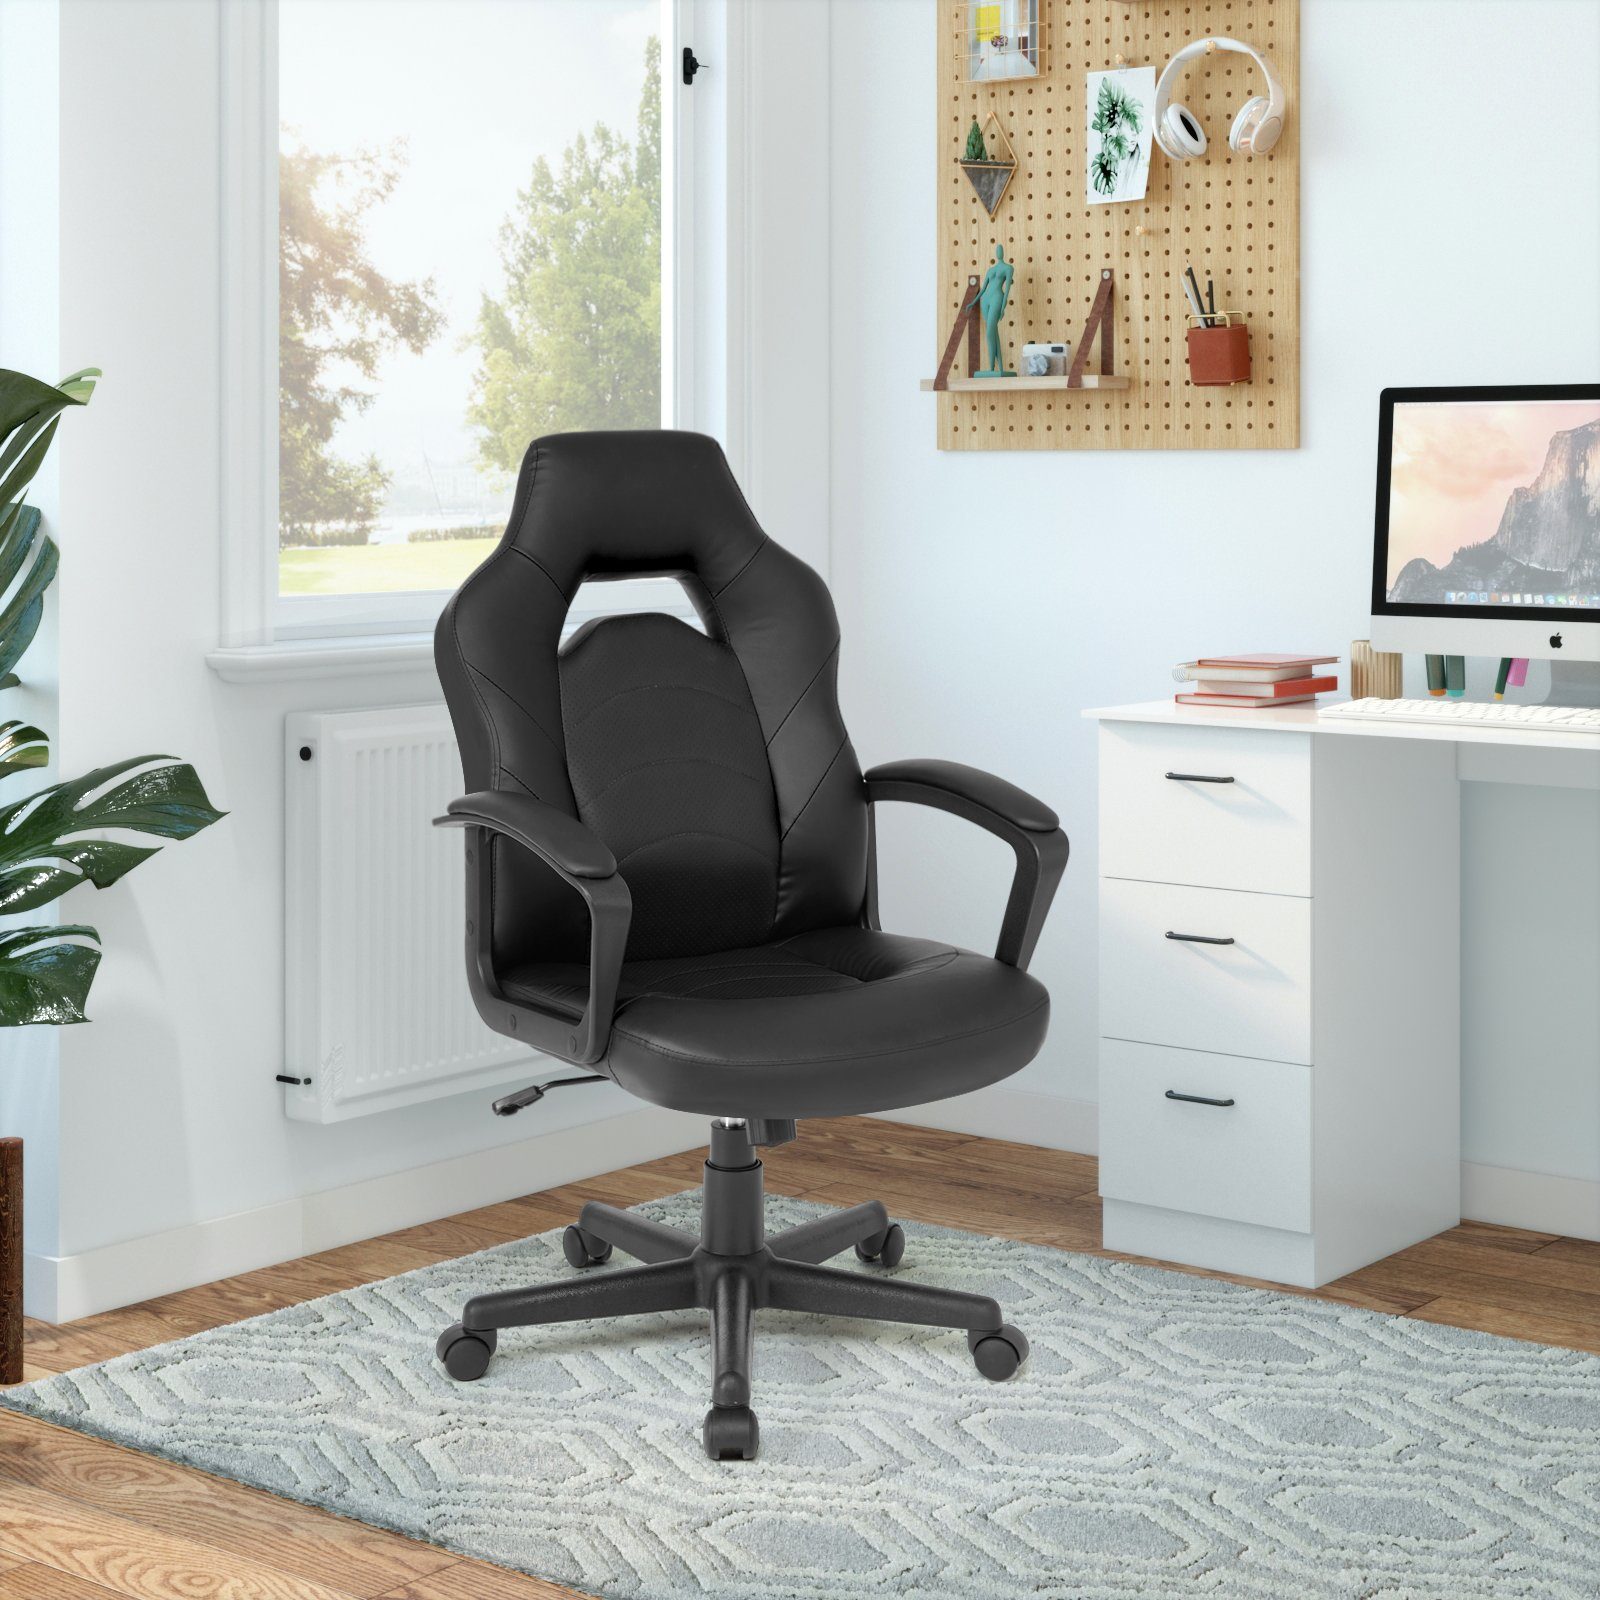 Intimate WM Heart Gaming Chair Office Bürostuhl,Computerstuhl schwarz Home